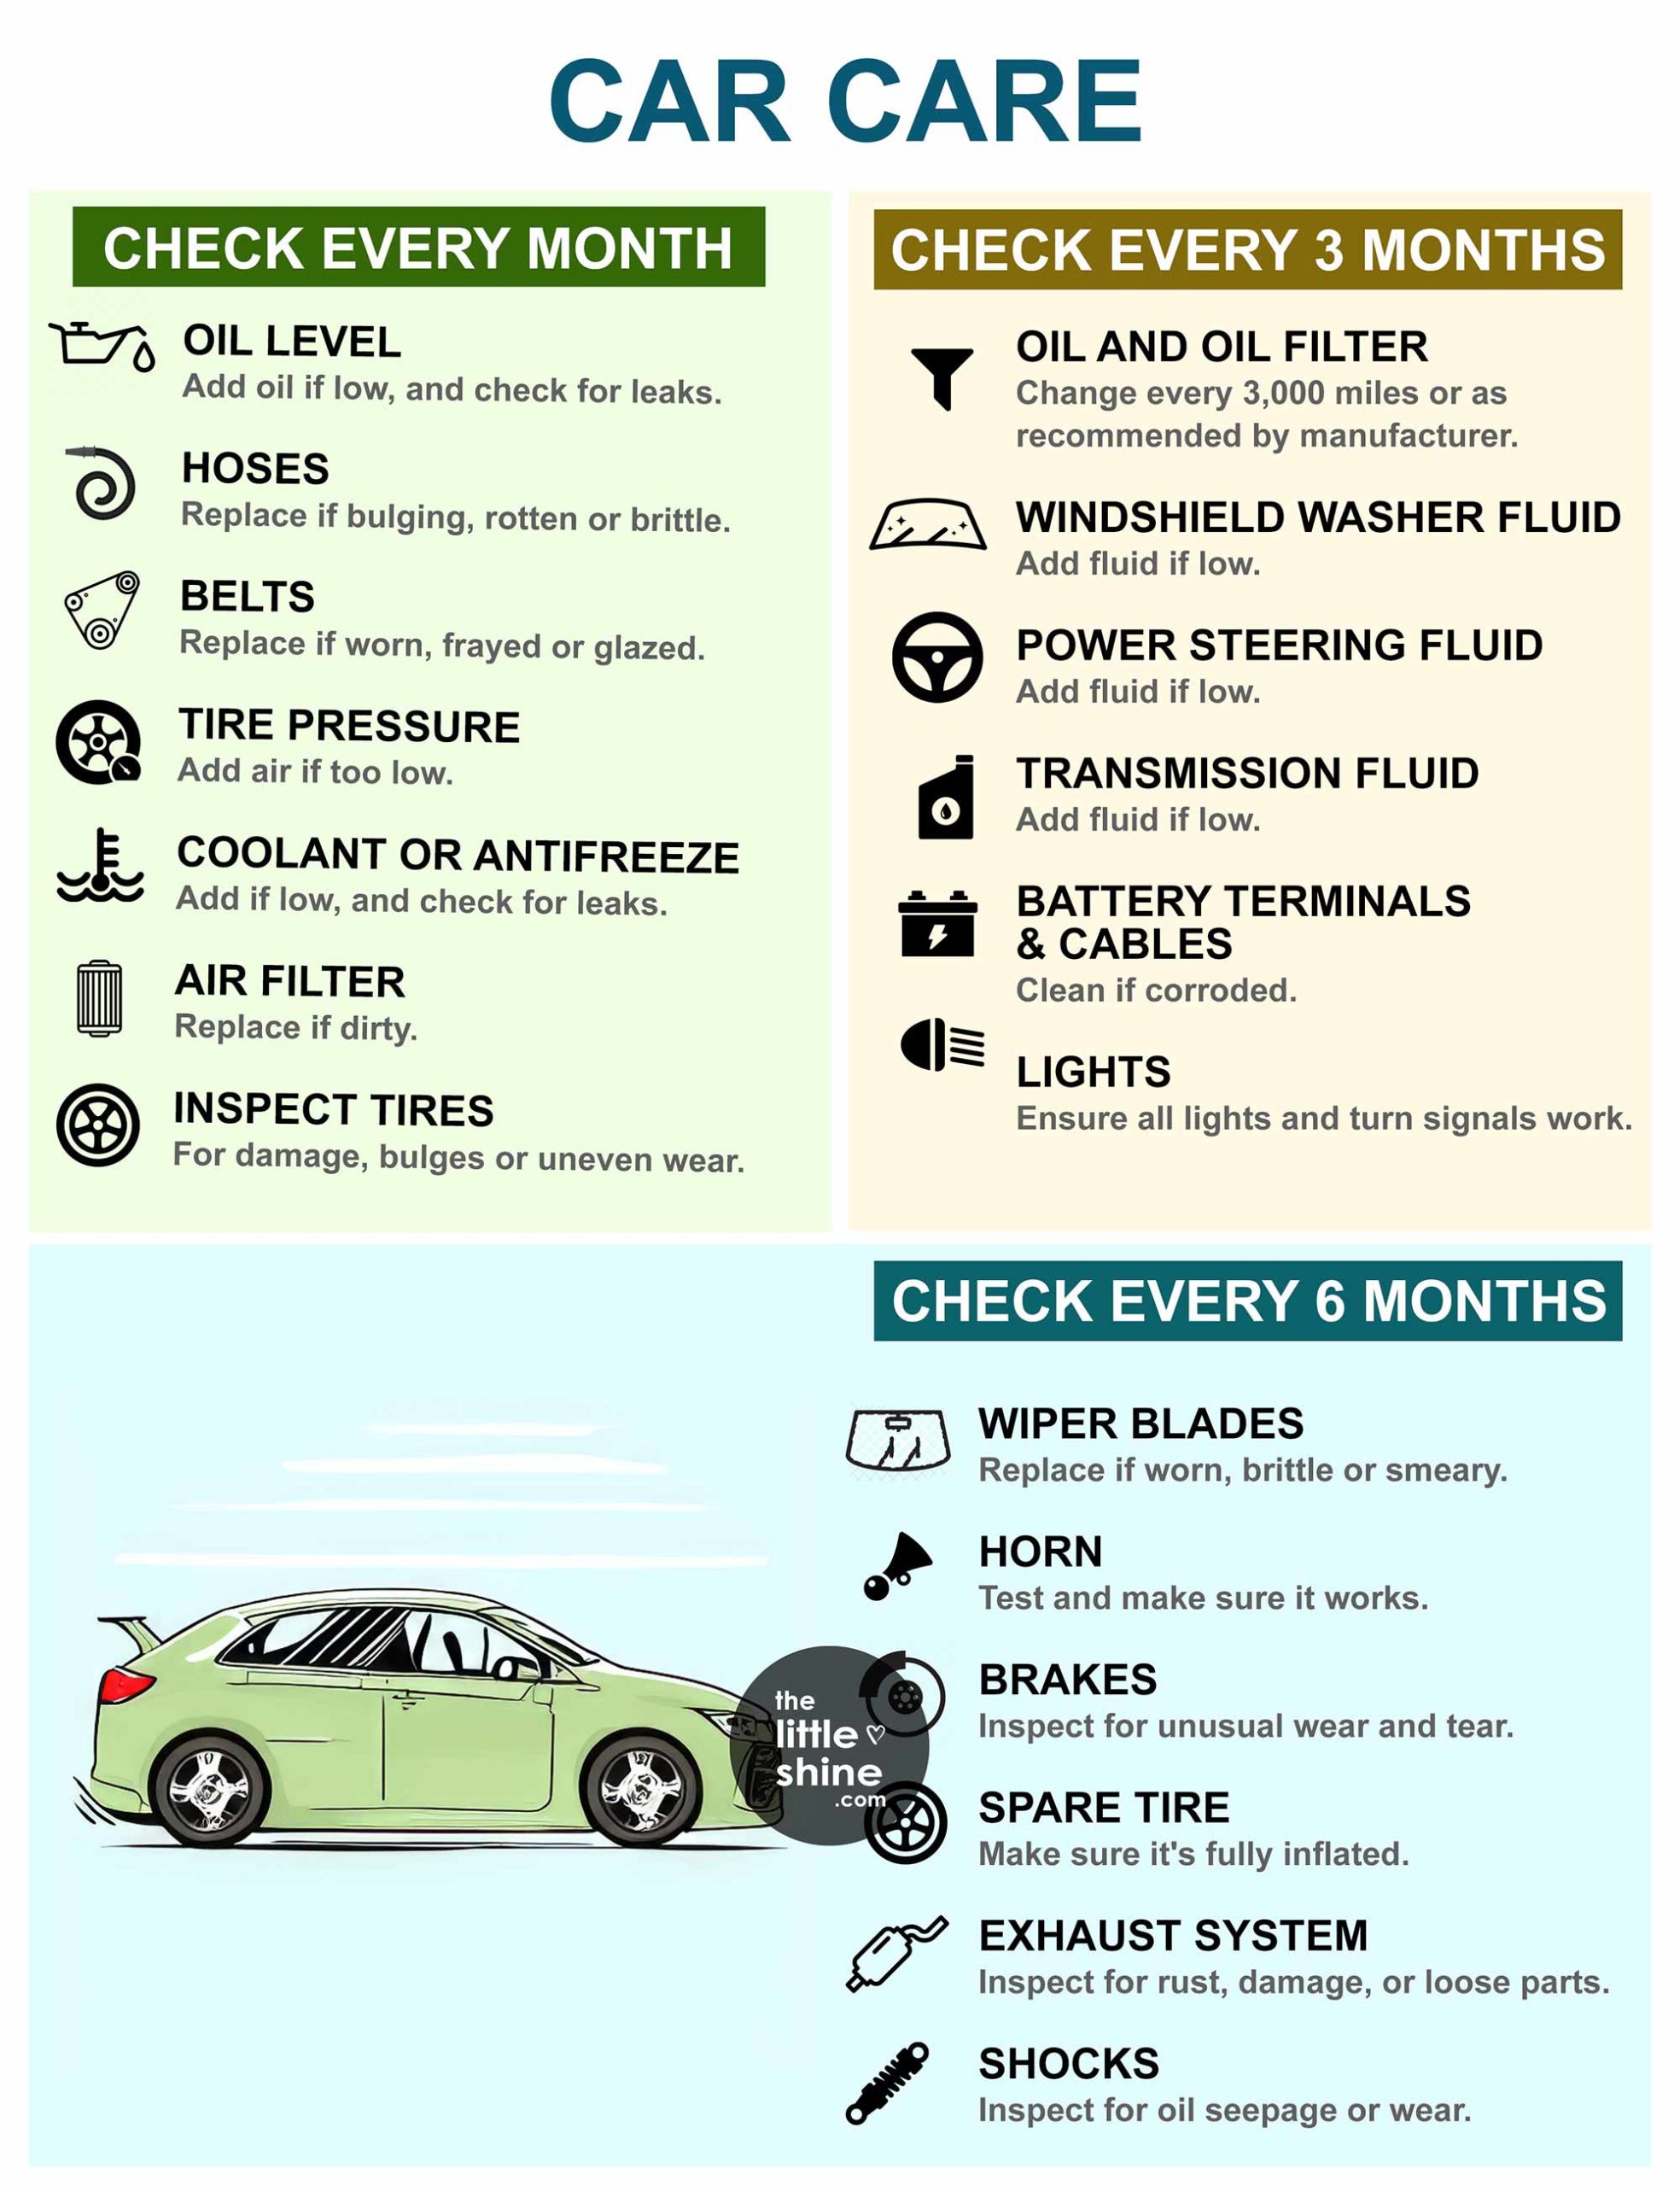 Car Care - The Car Maintenance Checklist